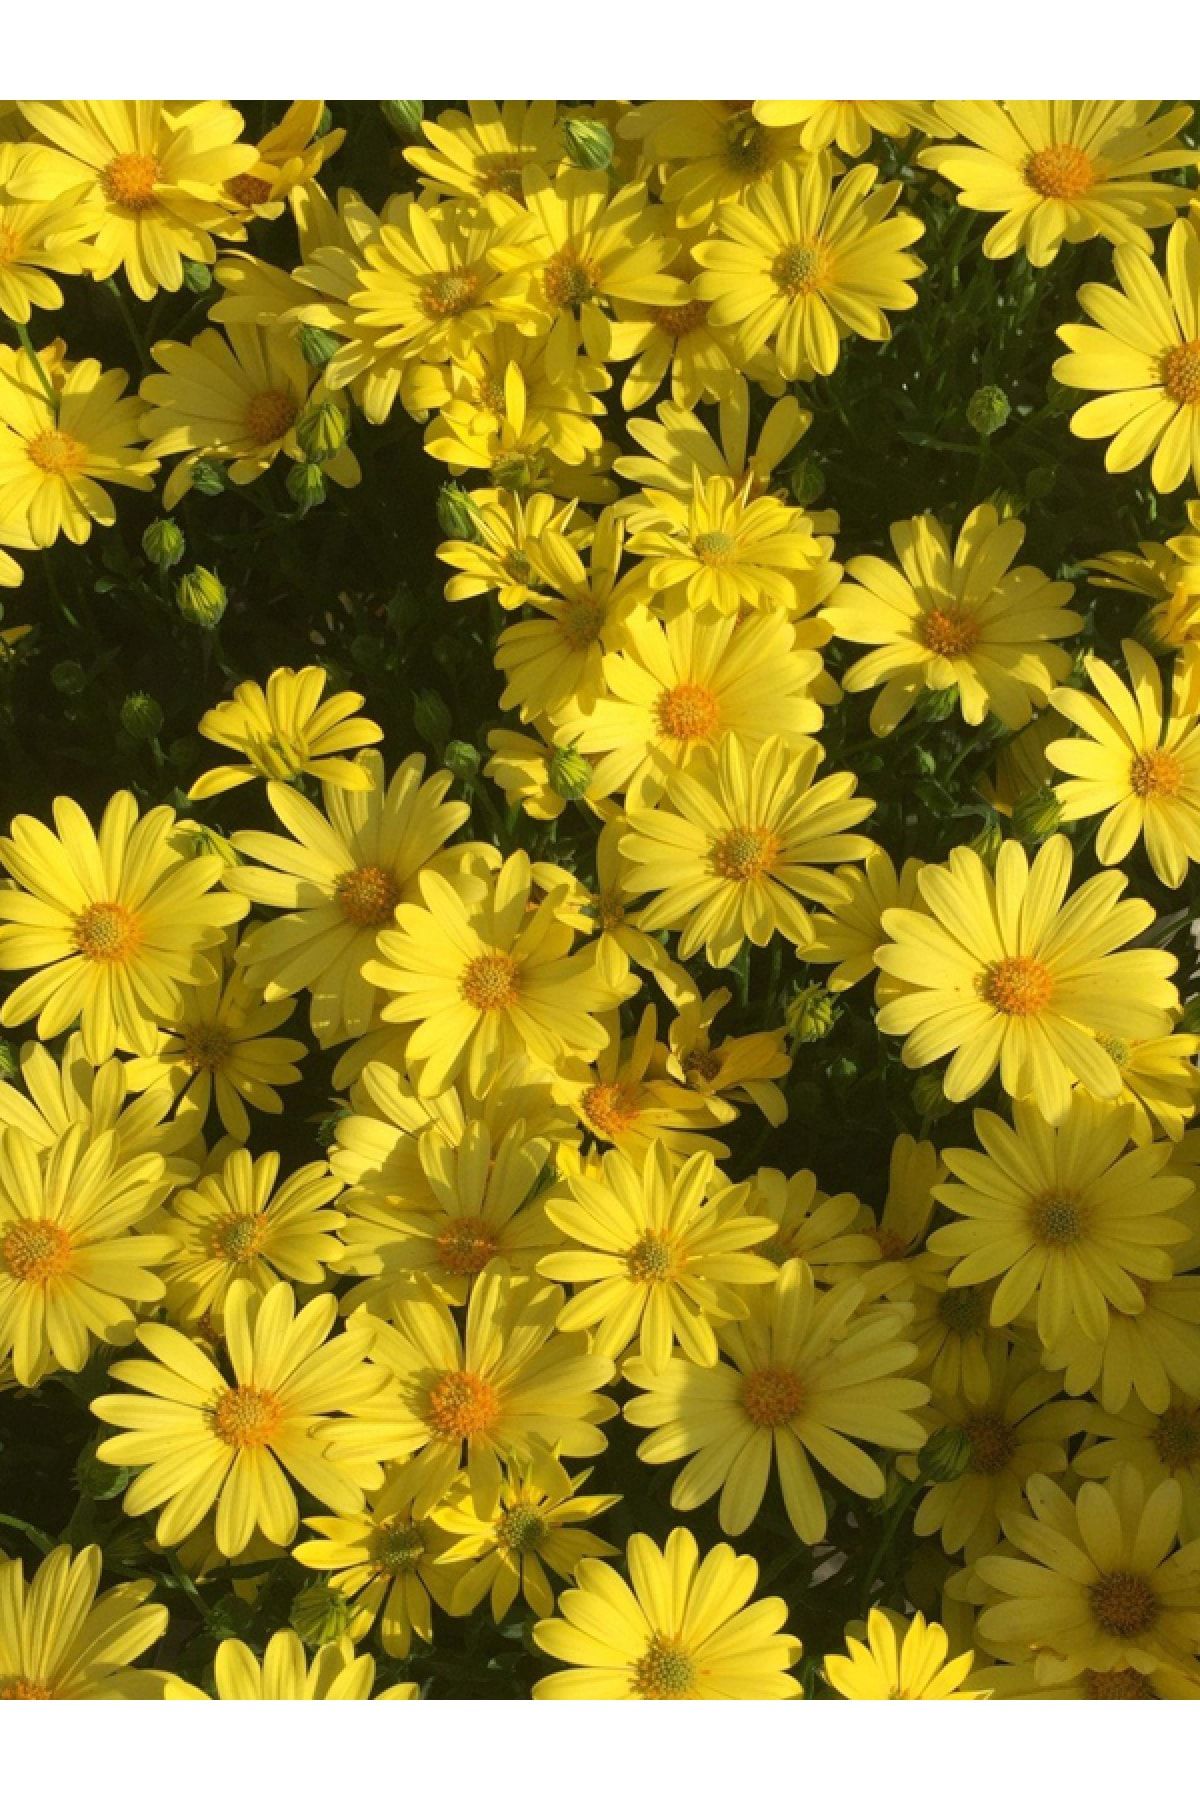 aktarix +10 Adet Sarı Papatya Çiçeği Tohumu